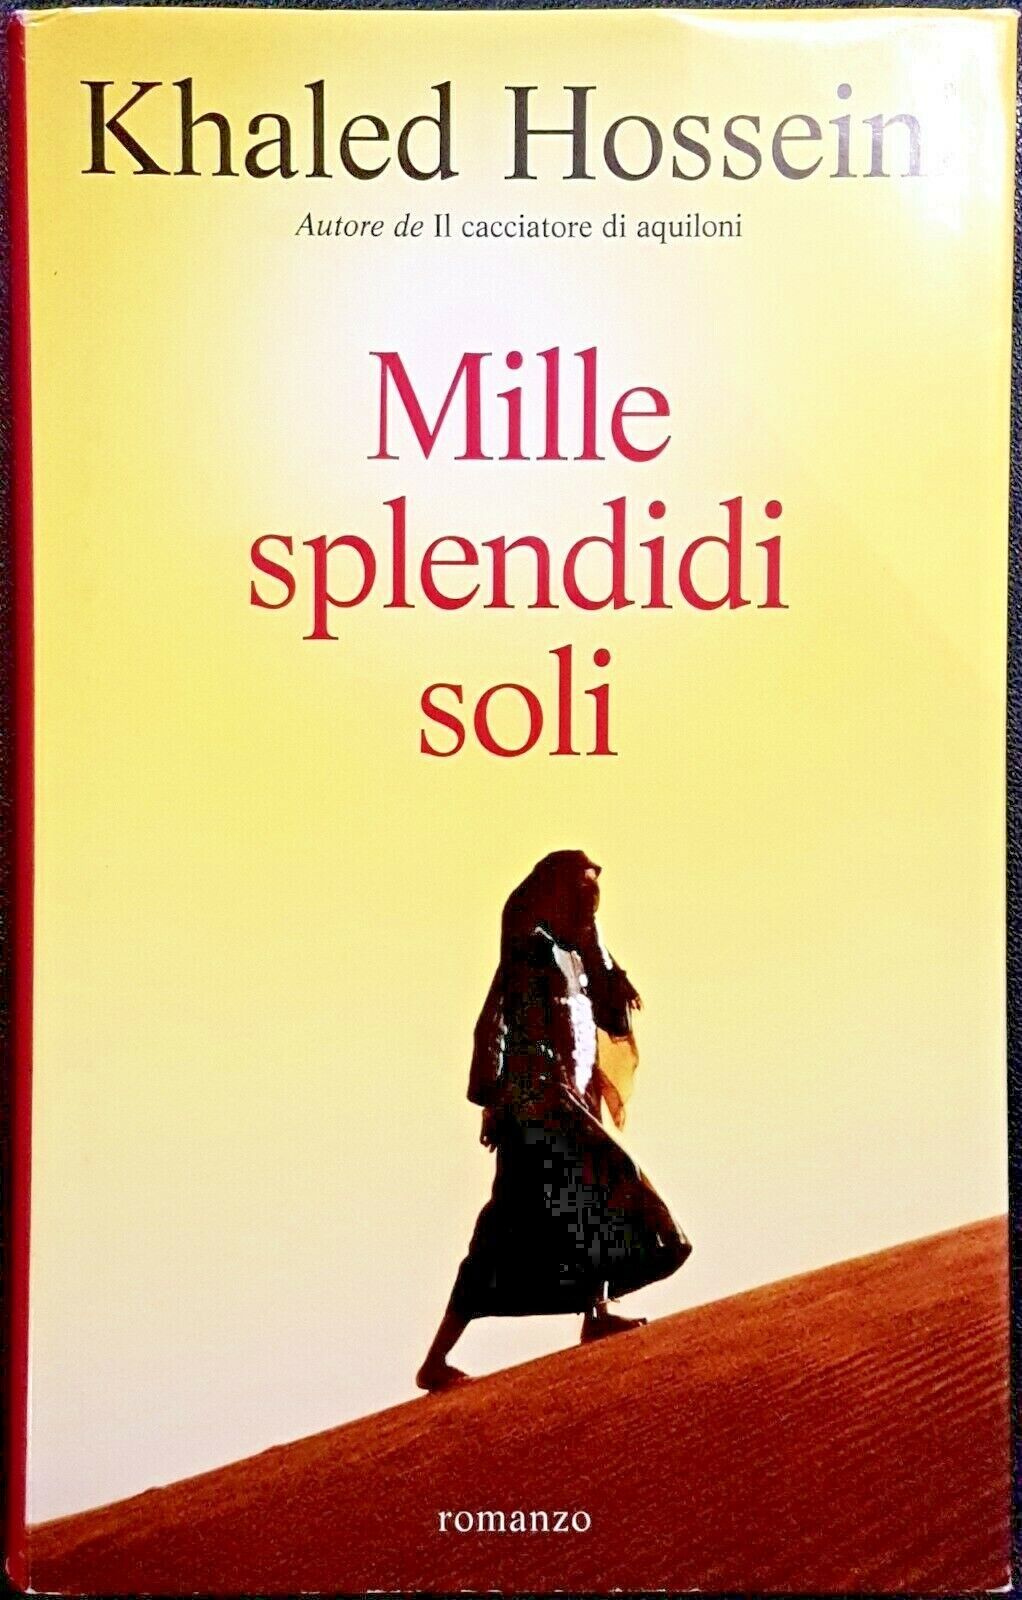 Khaled Hosseini, Mille splendidi soli, Ed. MondoLibri, 2007